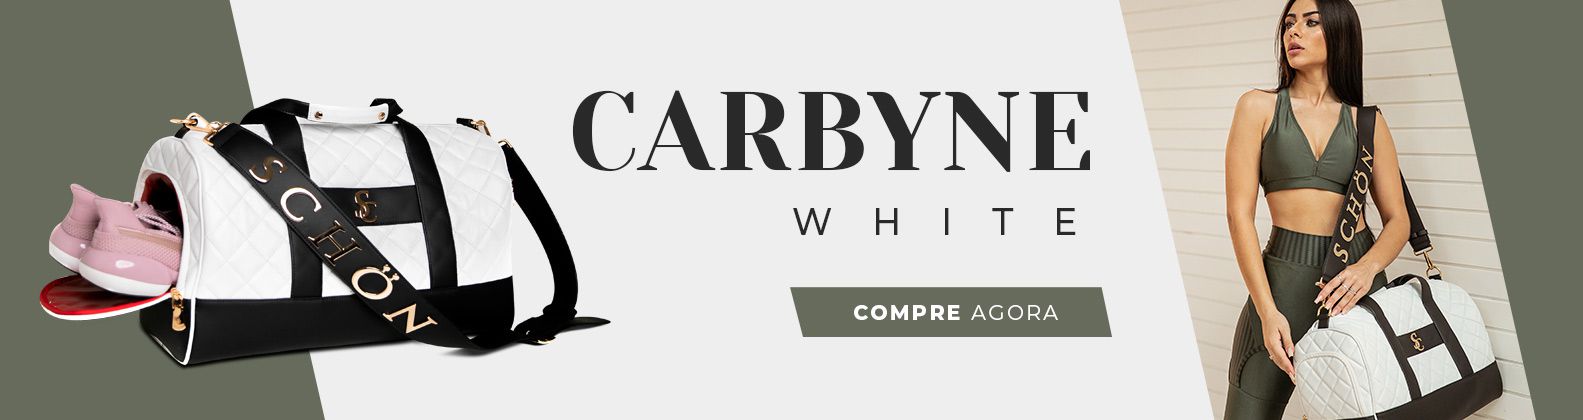 Carbyne White